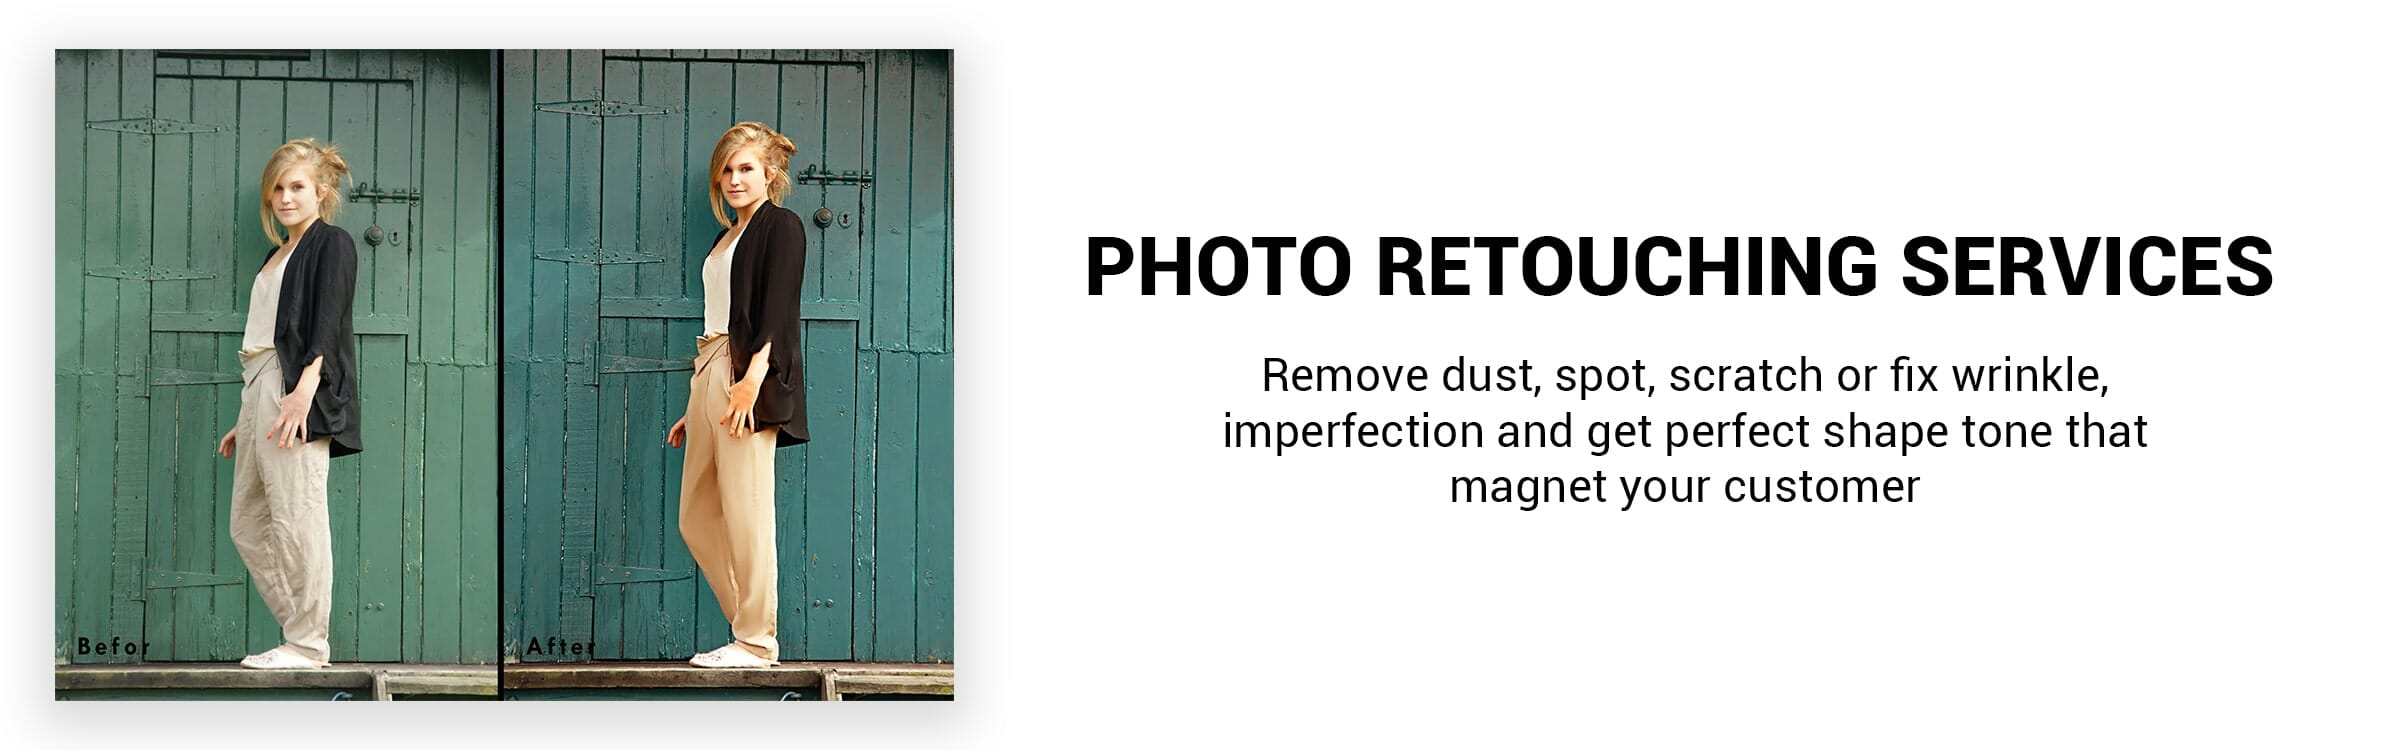 Photo retouching services